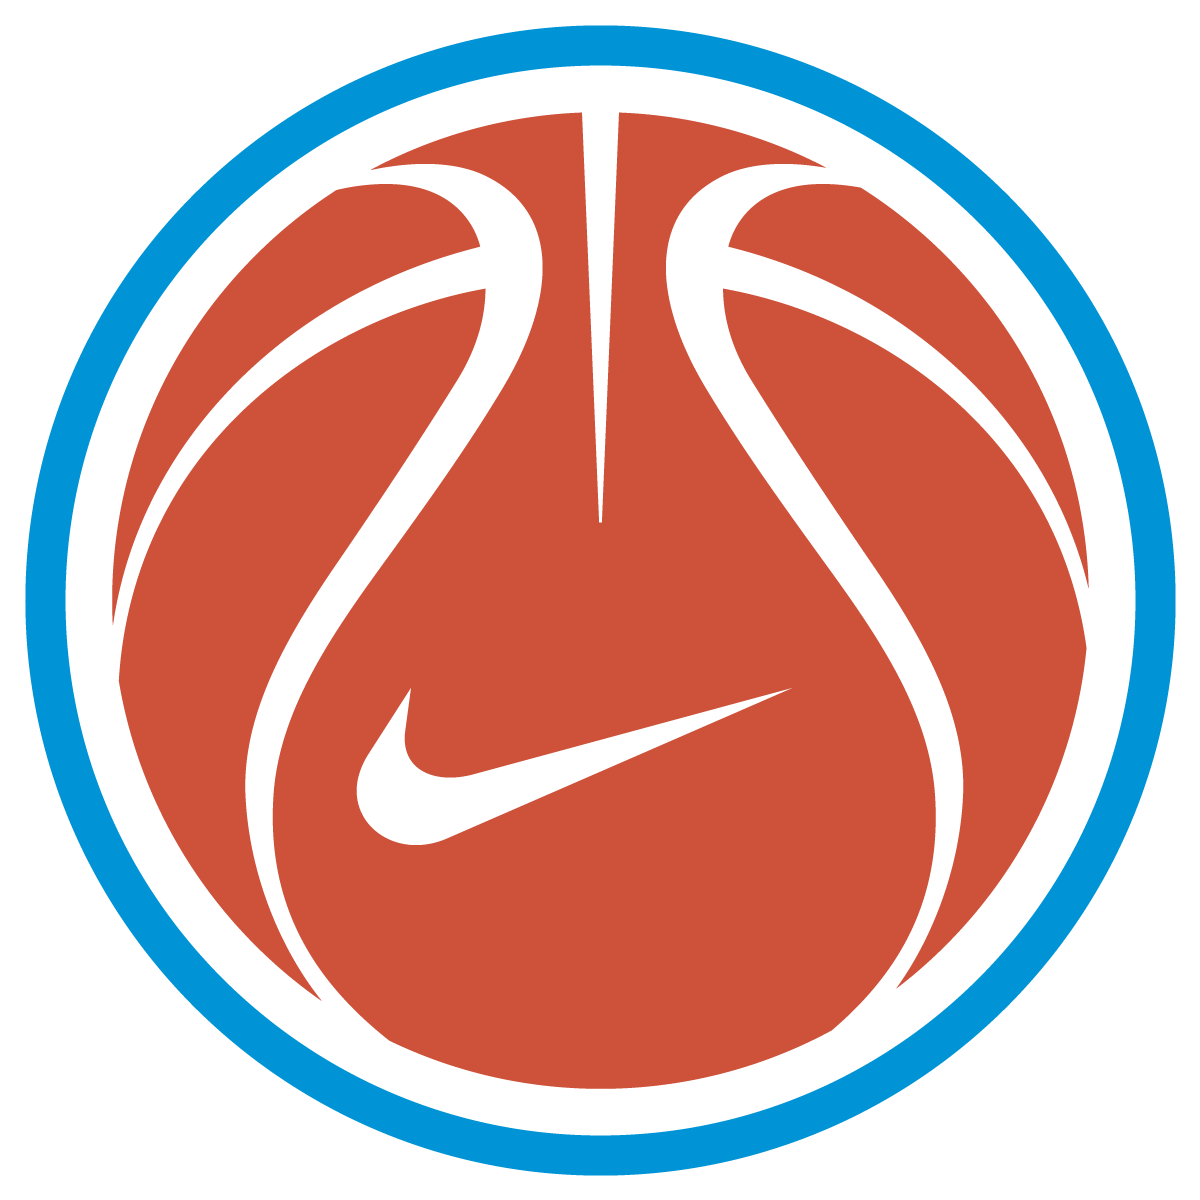 Baskeball Logo - Nike Basketball Logo Vector | Free Vector Silhouette Graphics AI EPS ...